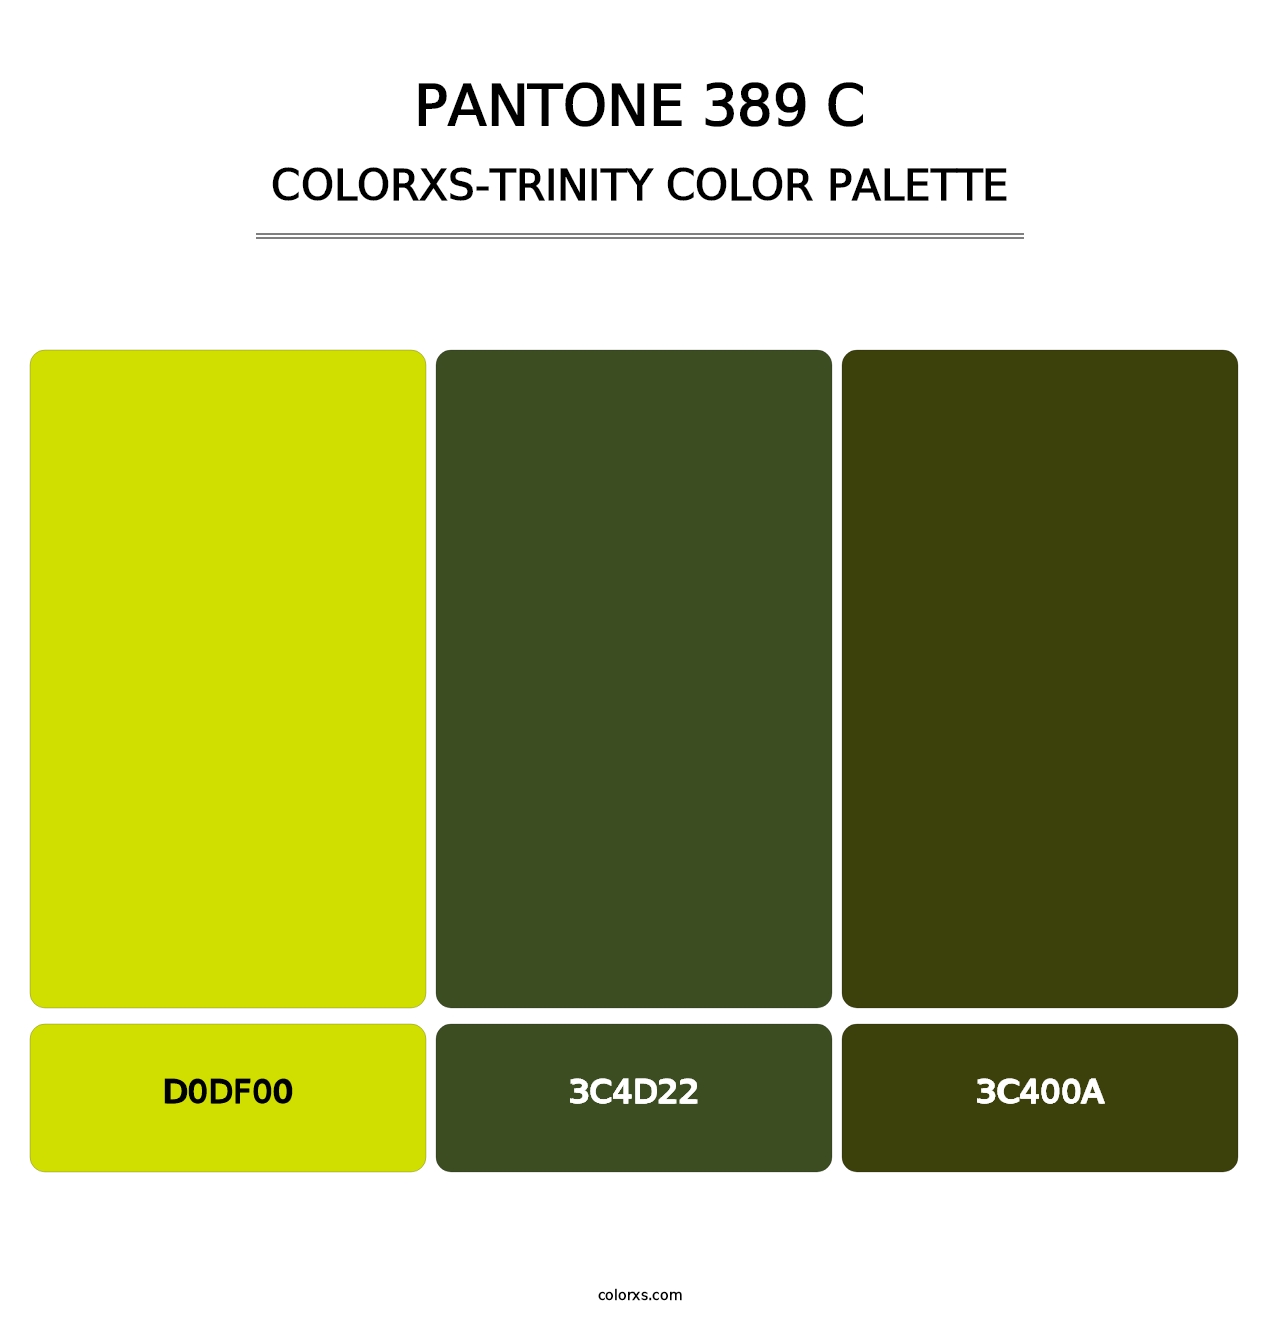 PANTONE 389 C - Colorxs Trinity Palette